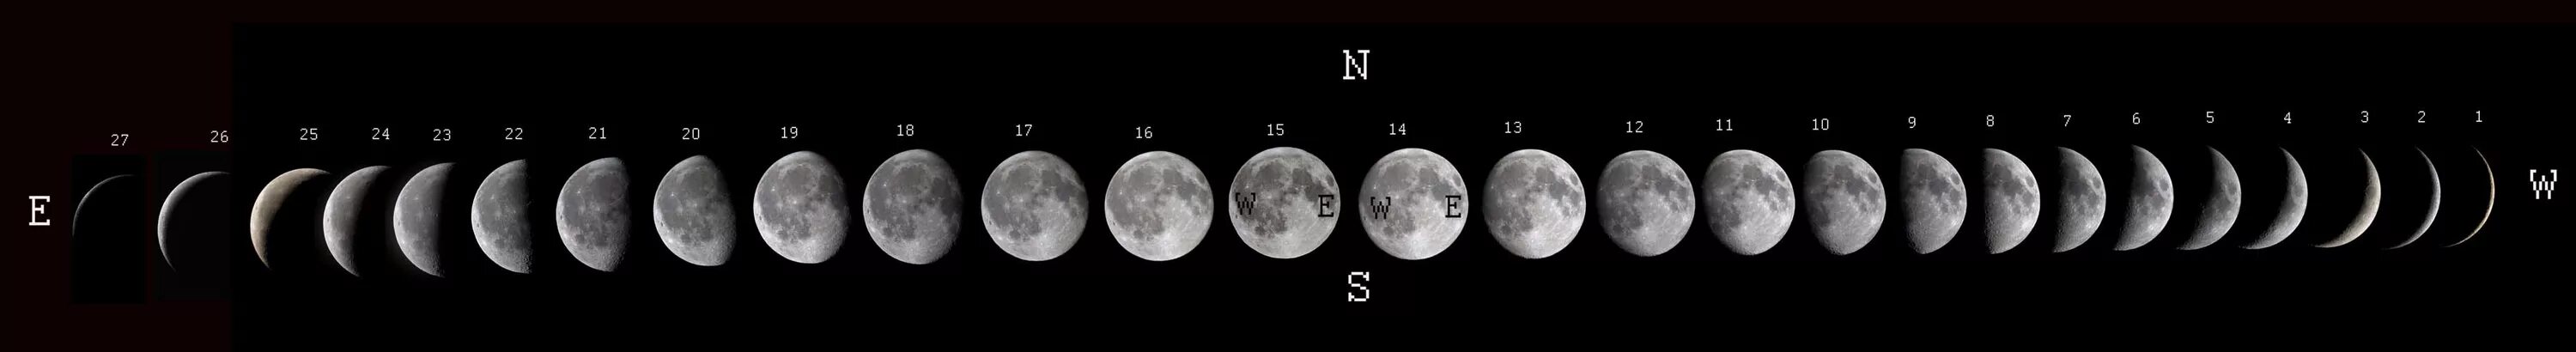 Фазы Луны. Разные формы Луны. Фазы Луны фото. Цикл лунных фаз. Период 3 луны